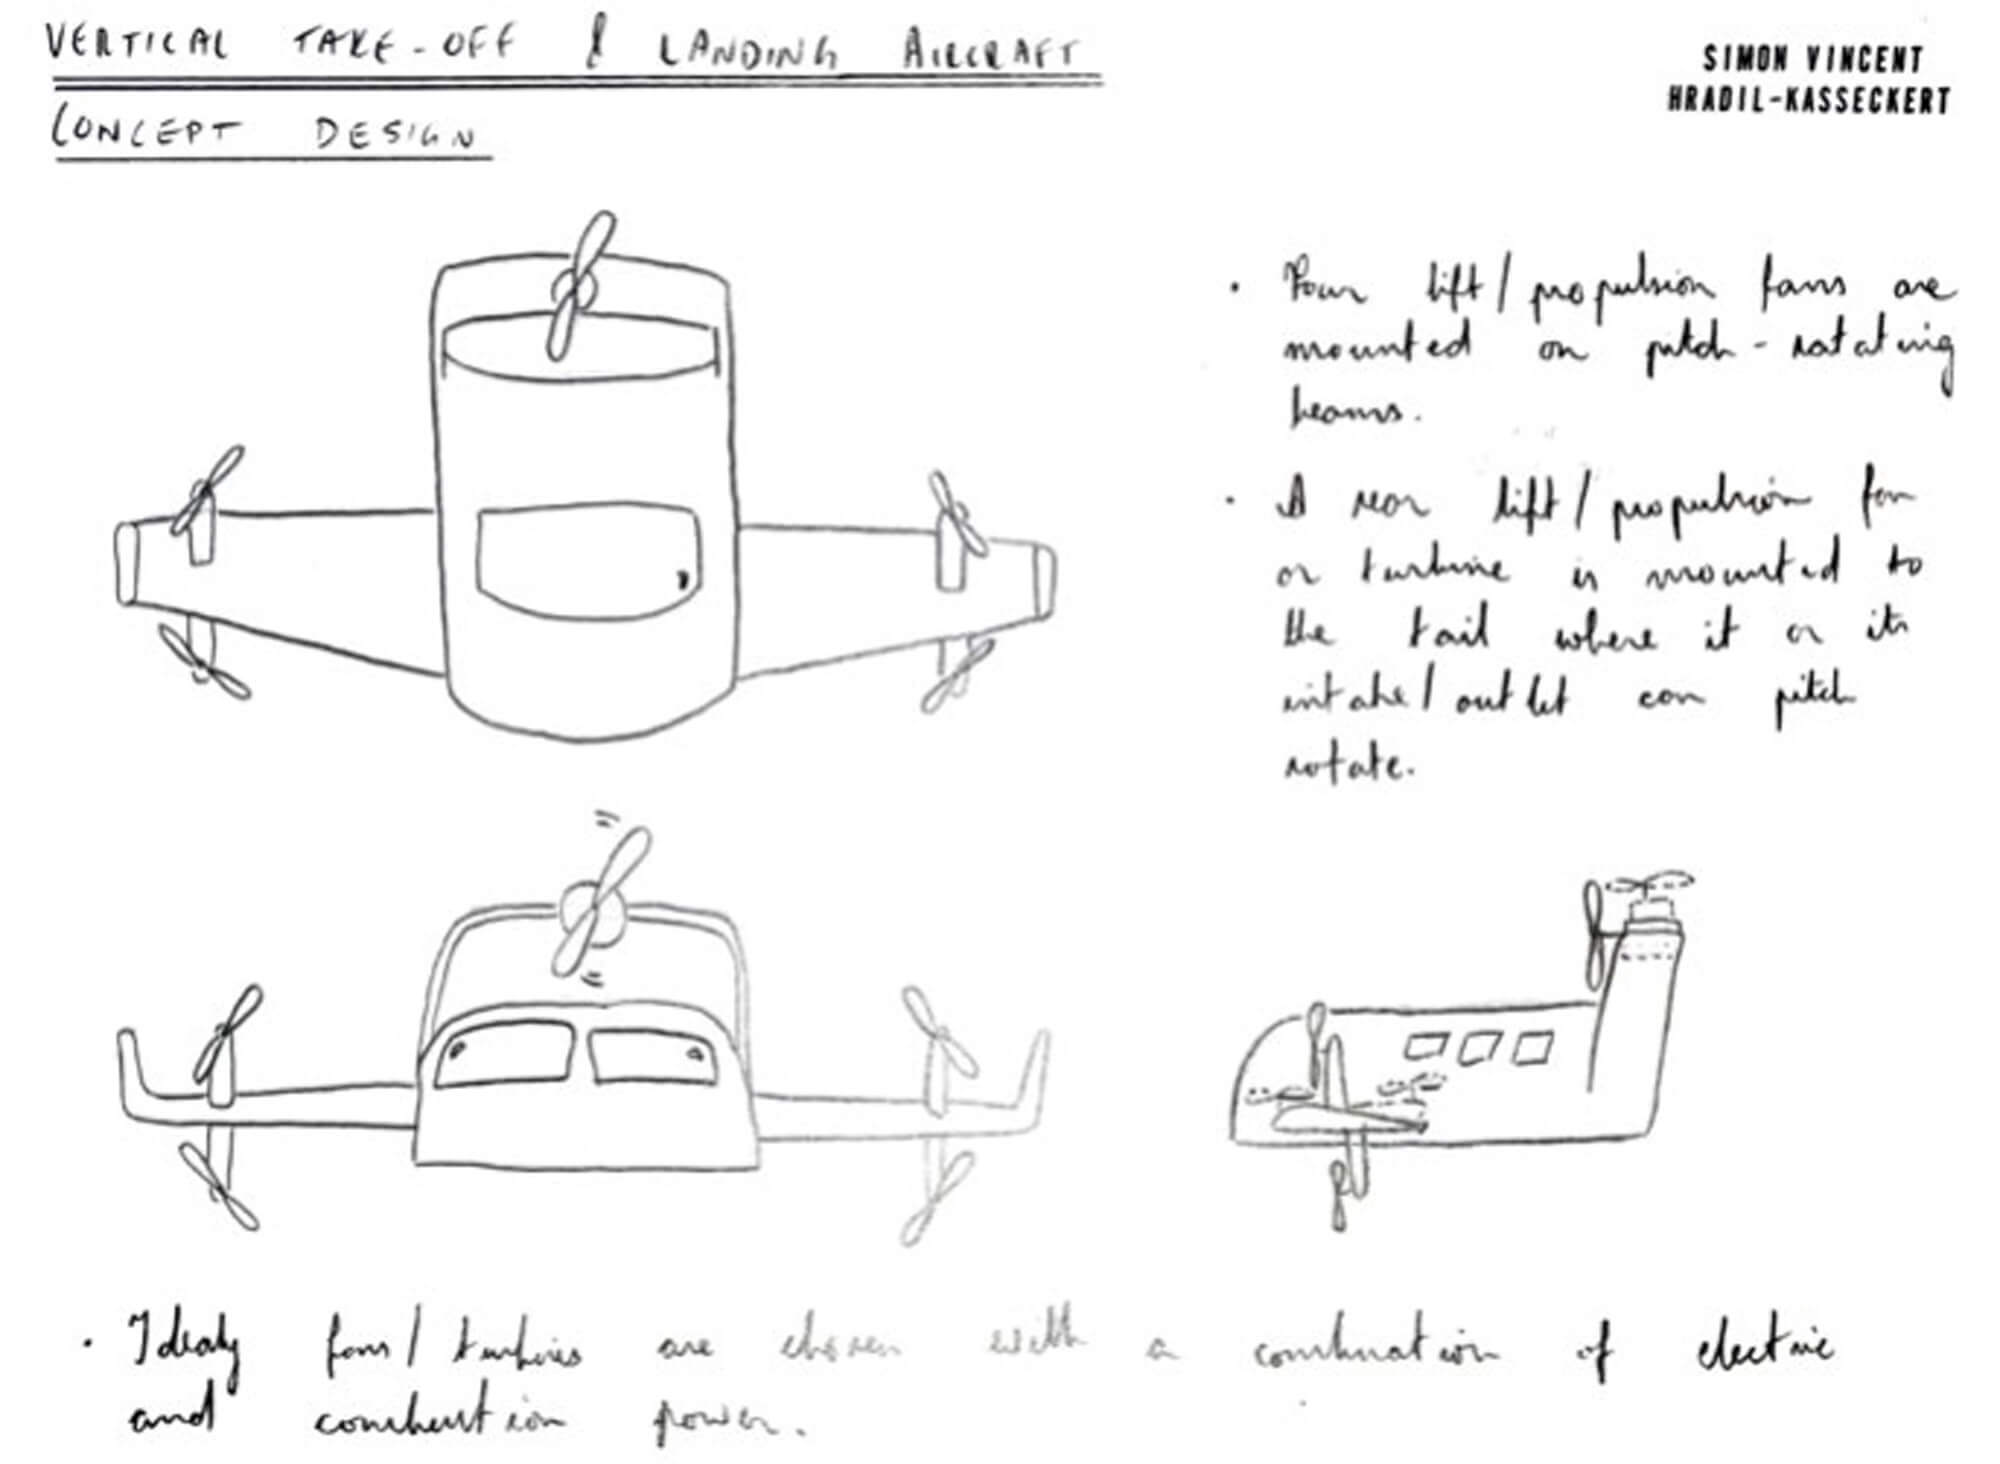 VTOL Aircraft Concept Design